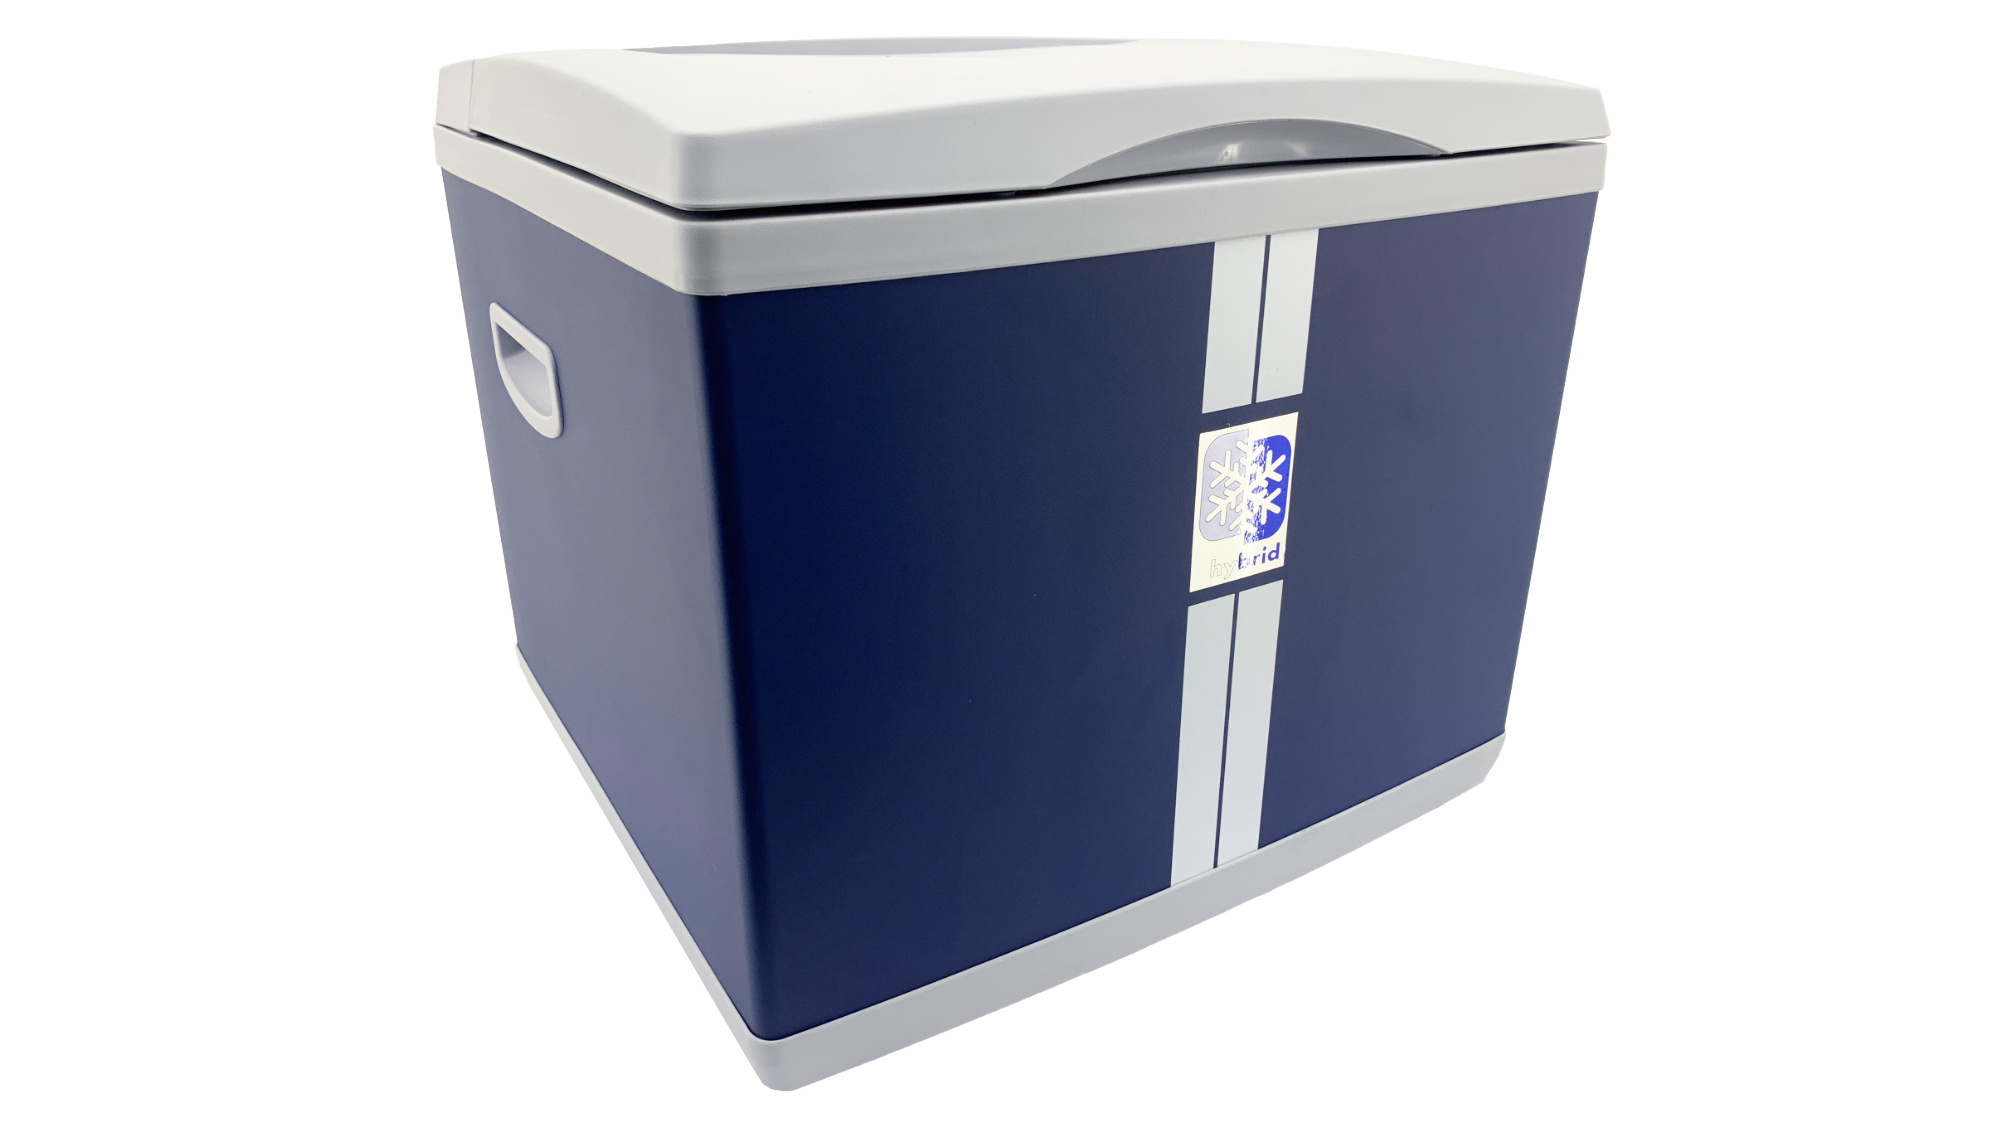 Kühlbox Mini Kühlschrank Kompressor Kühltruhe Gefriertruhe mit